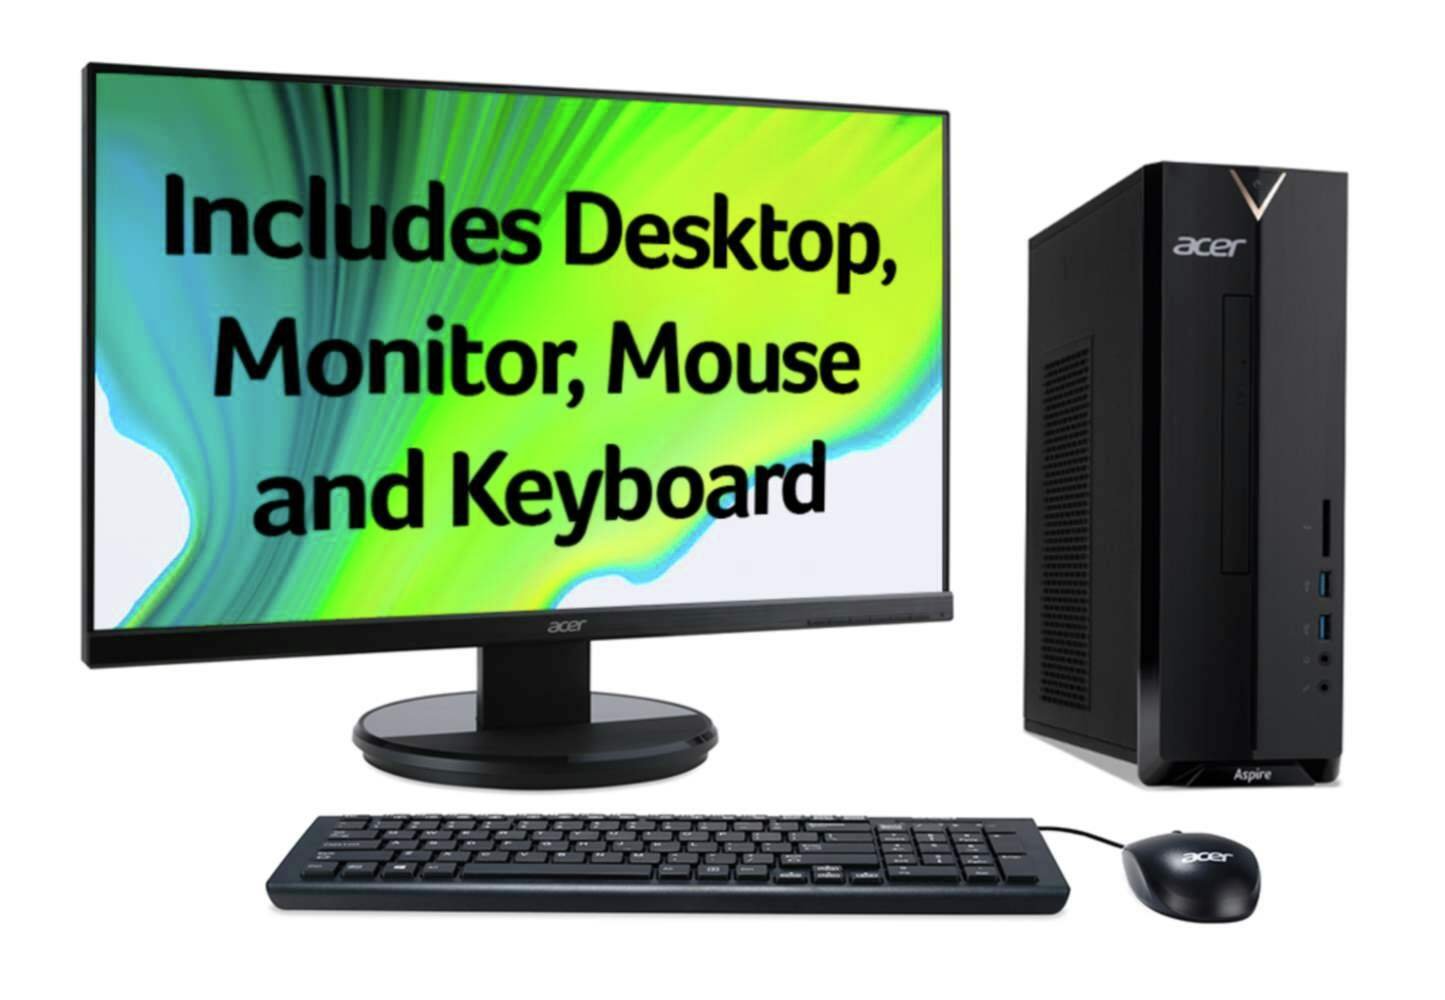 Acer XC330 A6 4GB 1TB Desktop PC & Monitor Bundle Review